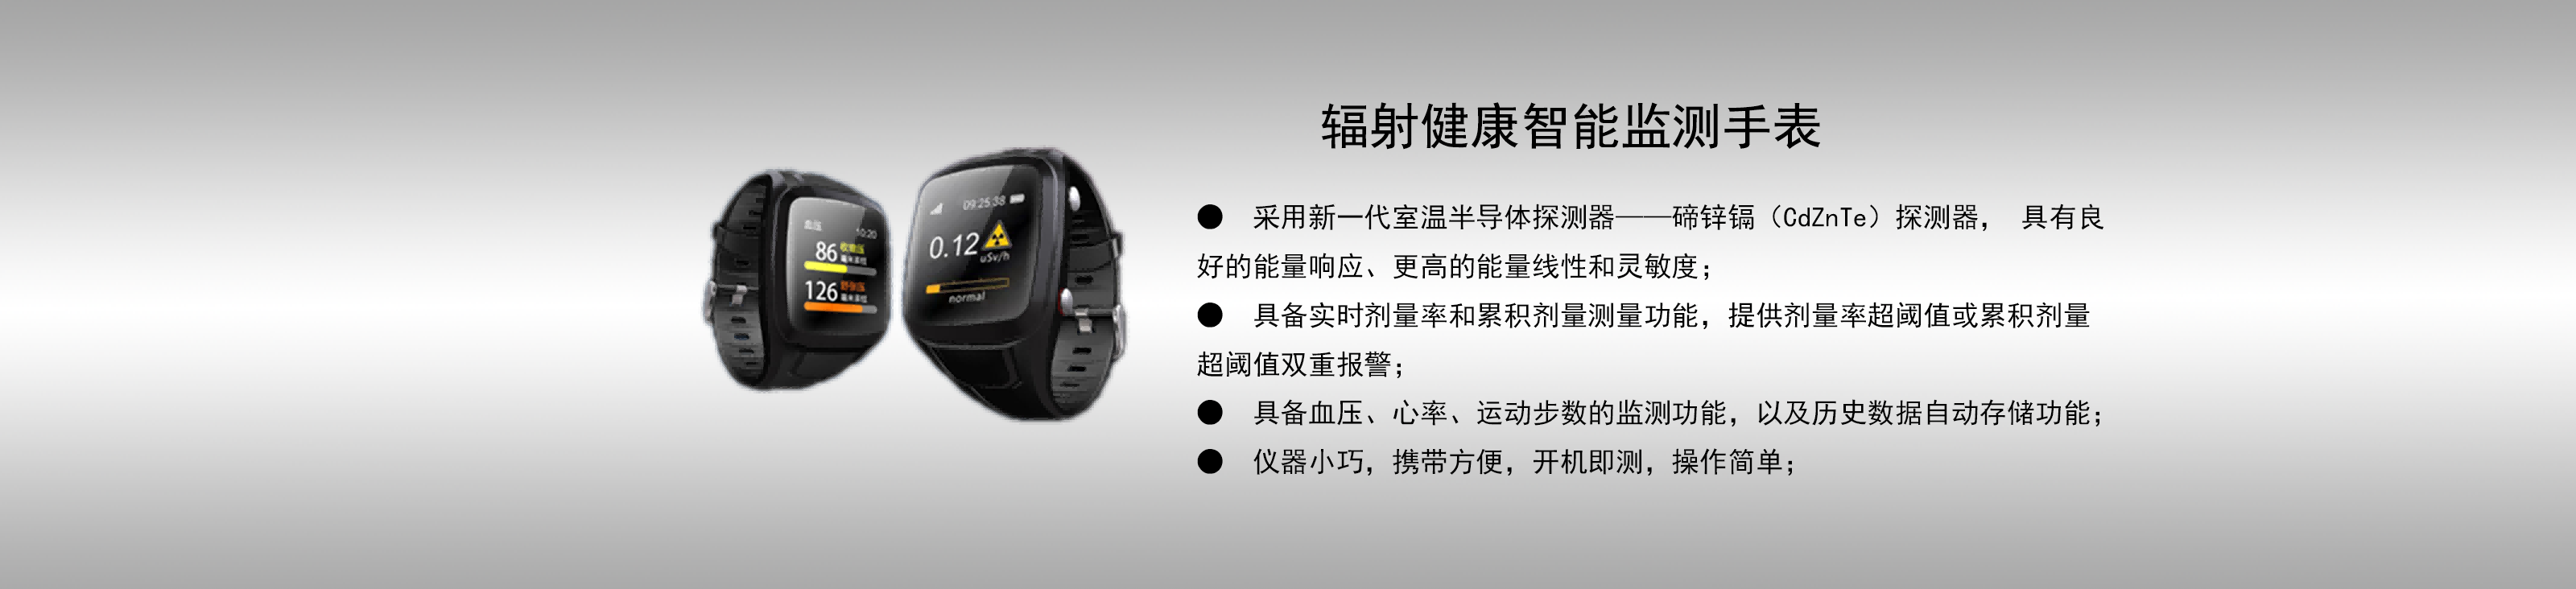 ZC31201A辐射健康智能监测手表